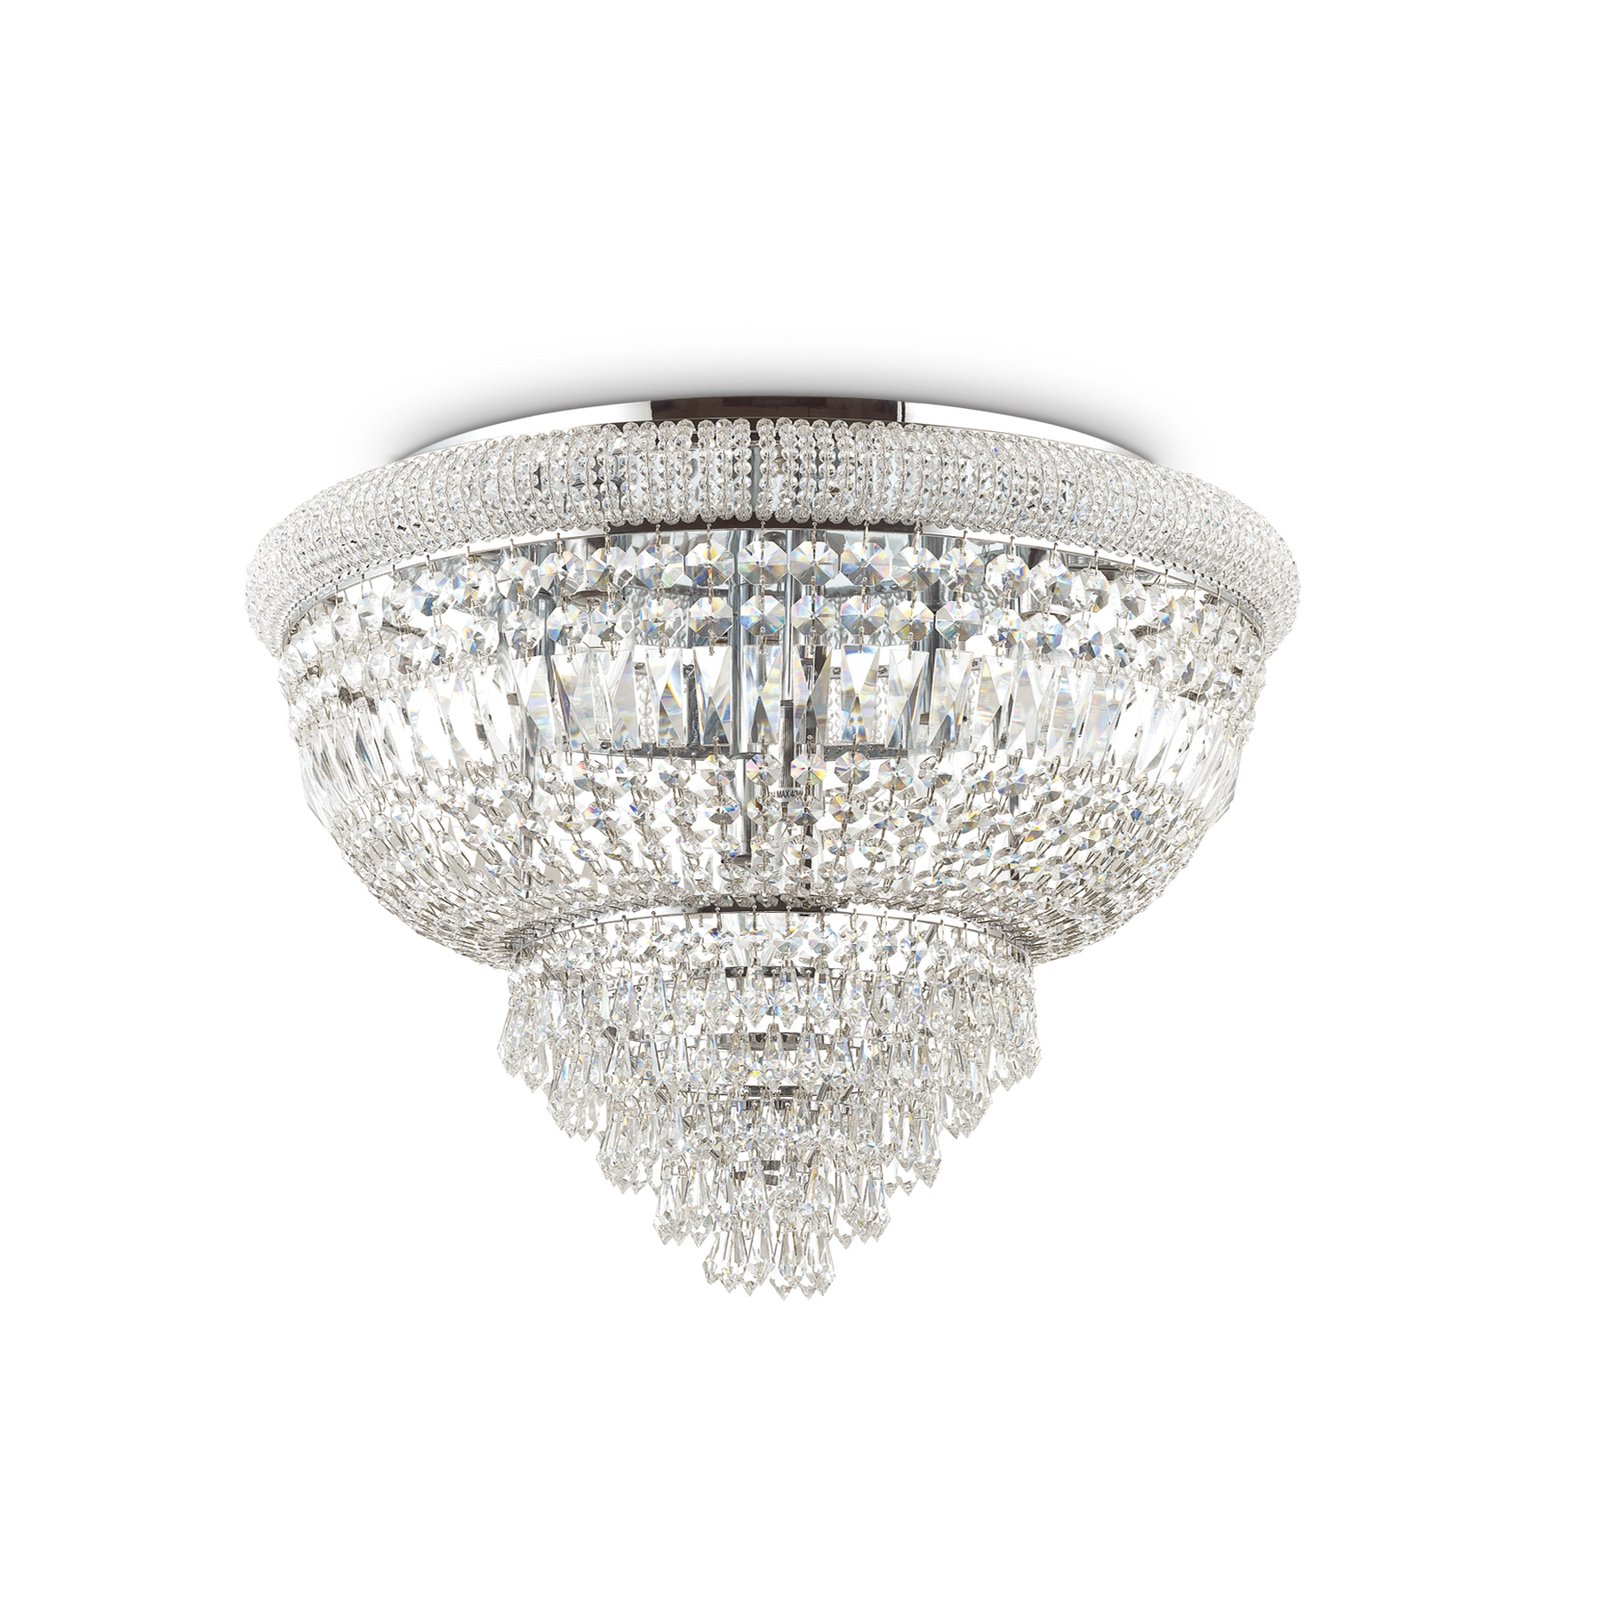 Ideal Lux Deckenlampe Dubai, chromfarben, Kristall, Ø 78 cm